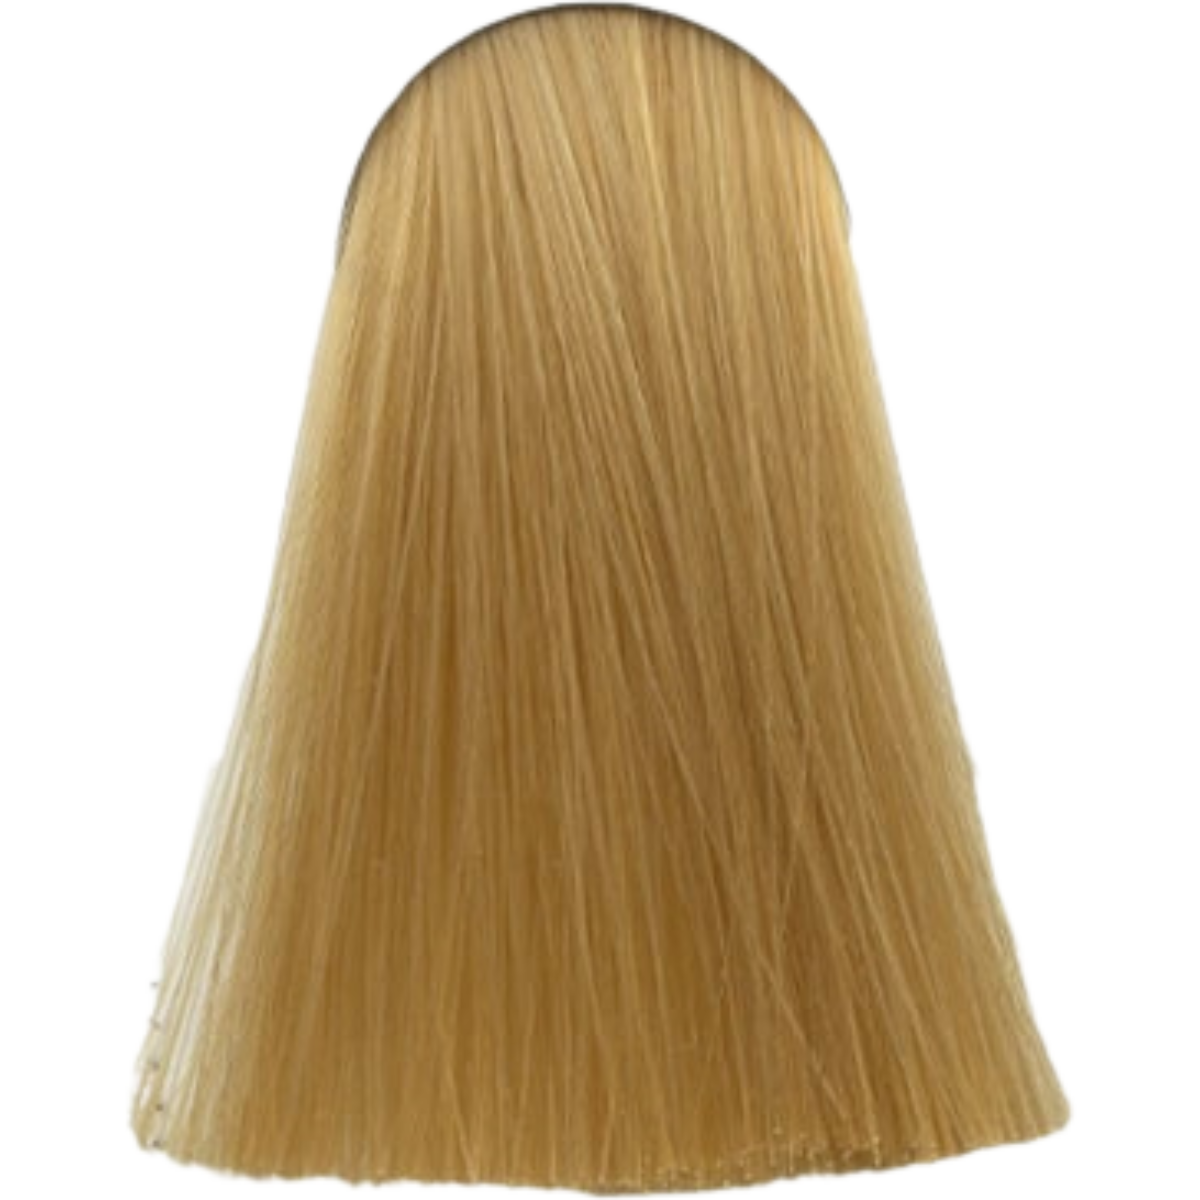 צבע שיער 9.03 VERY LIGHT BLONDE NATURAL GOLD אינדולה INDOLA צבע בסיס לשיער 60 גרם